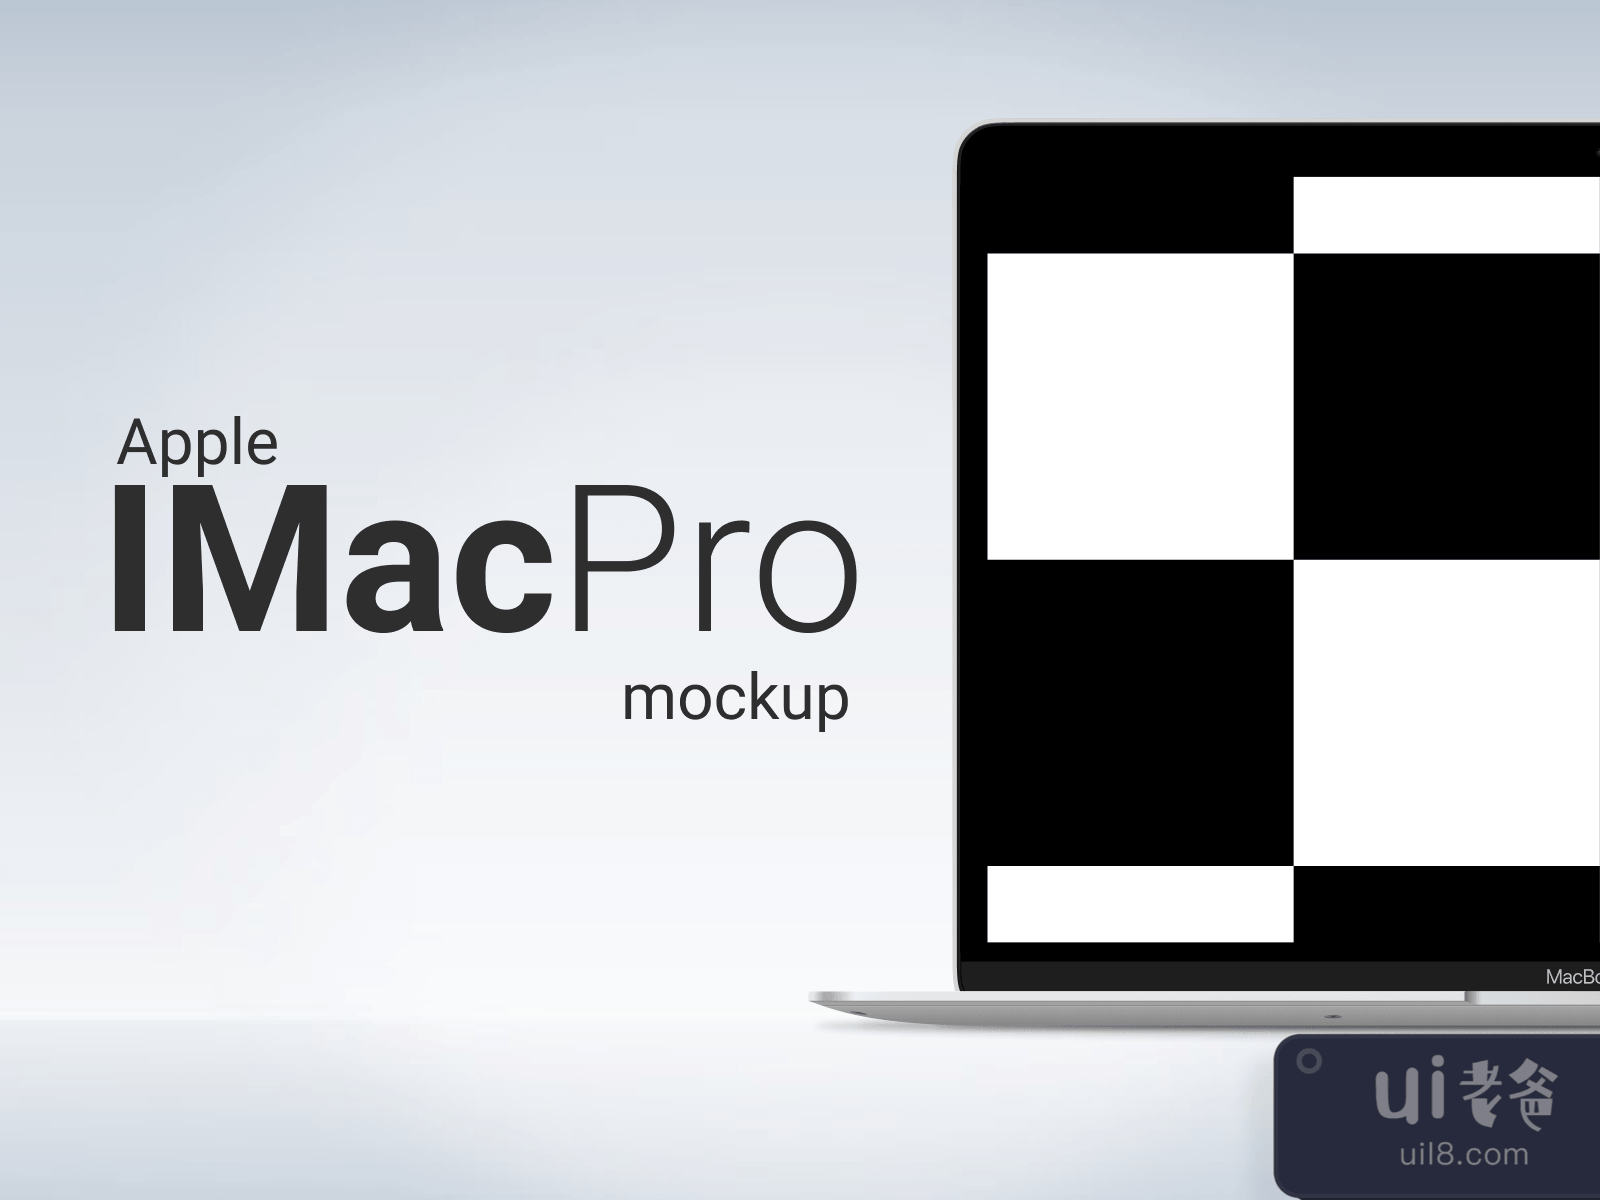 iMac Pro 27 Mockup for Figma and Adobe XD No 2